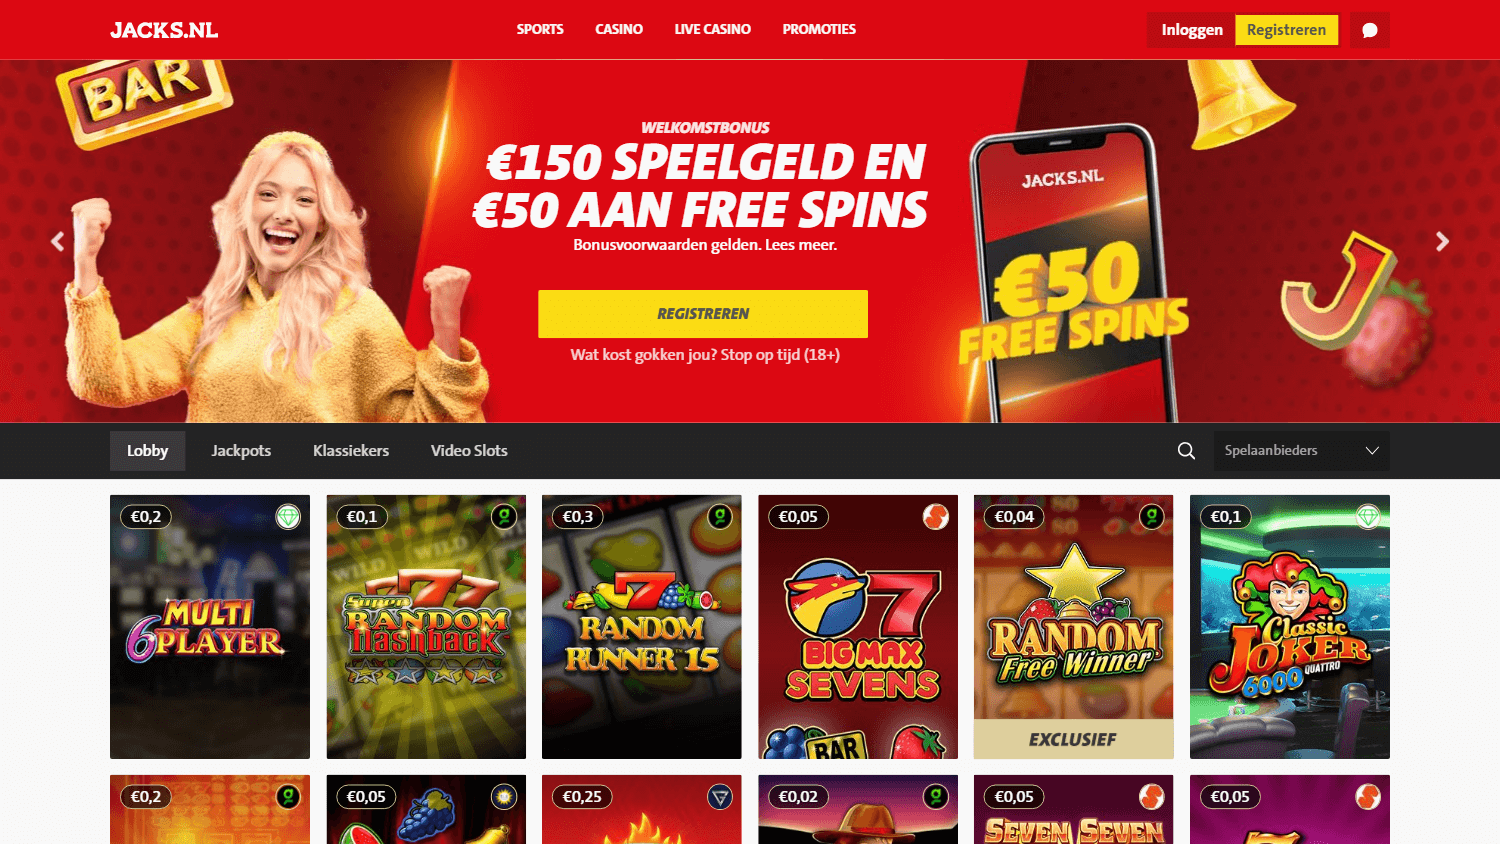 jacks.nl_casino_game_gallery_desktop